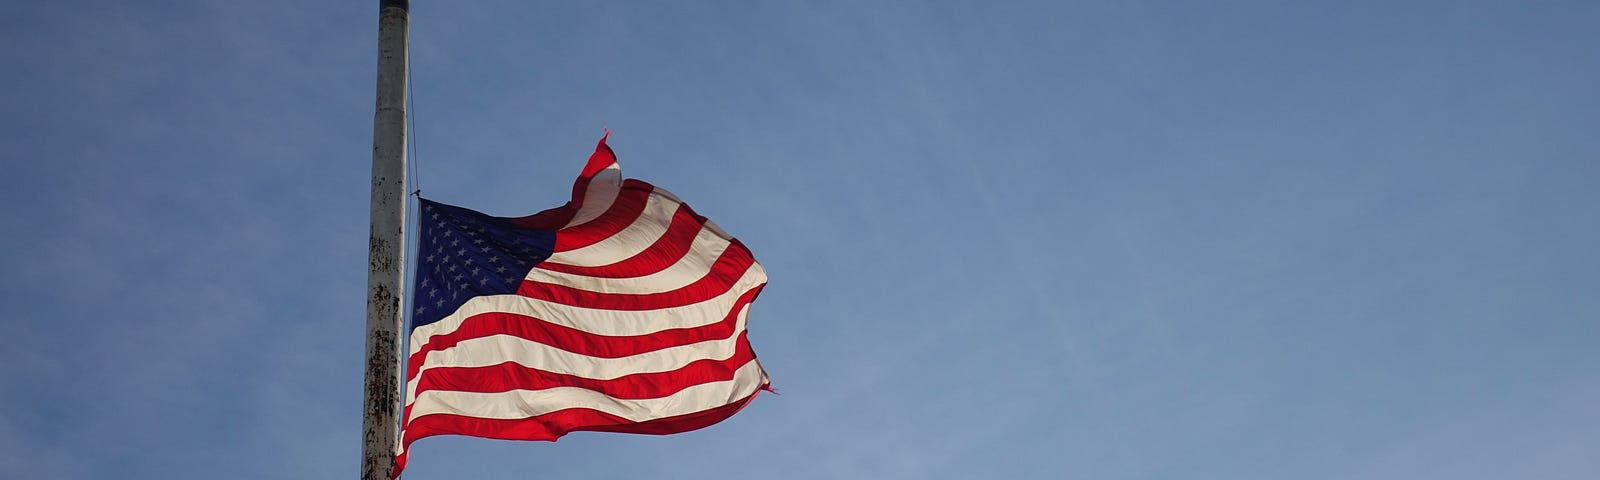 An American flag raised at half mast.